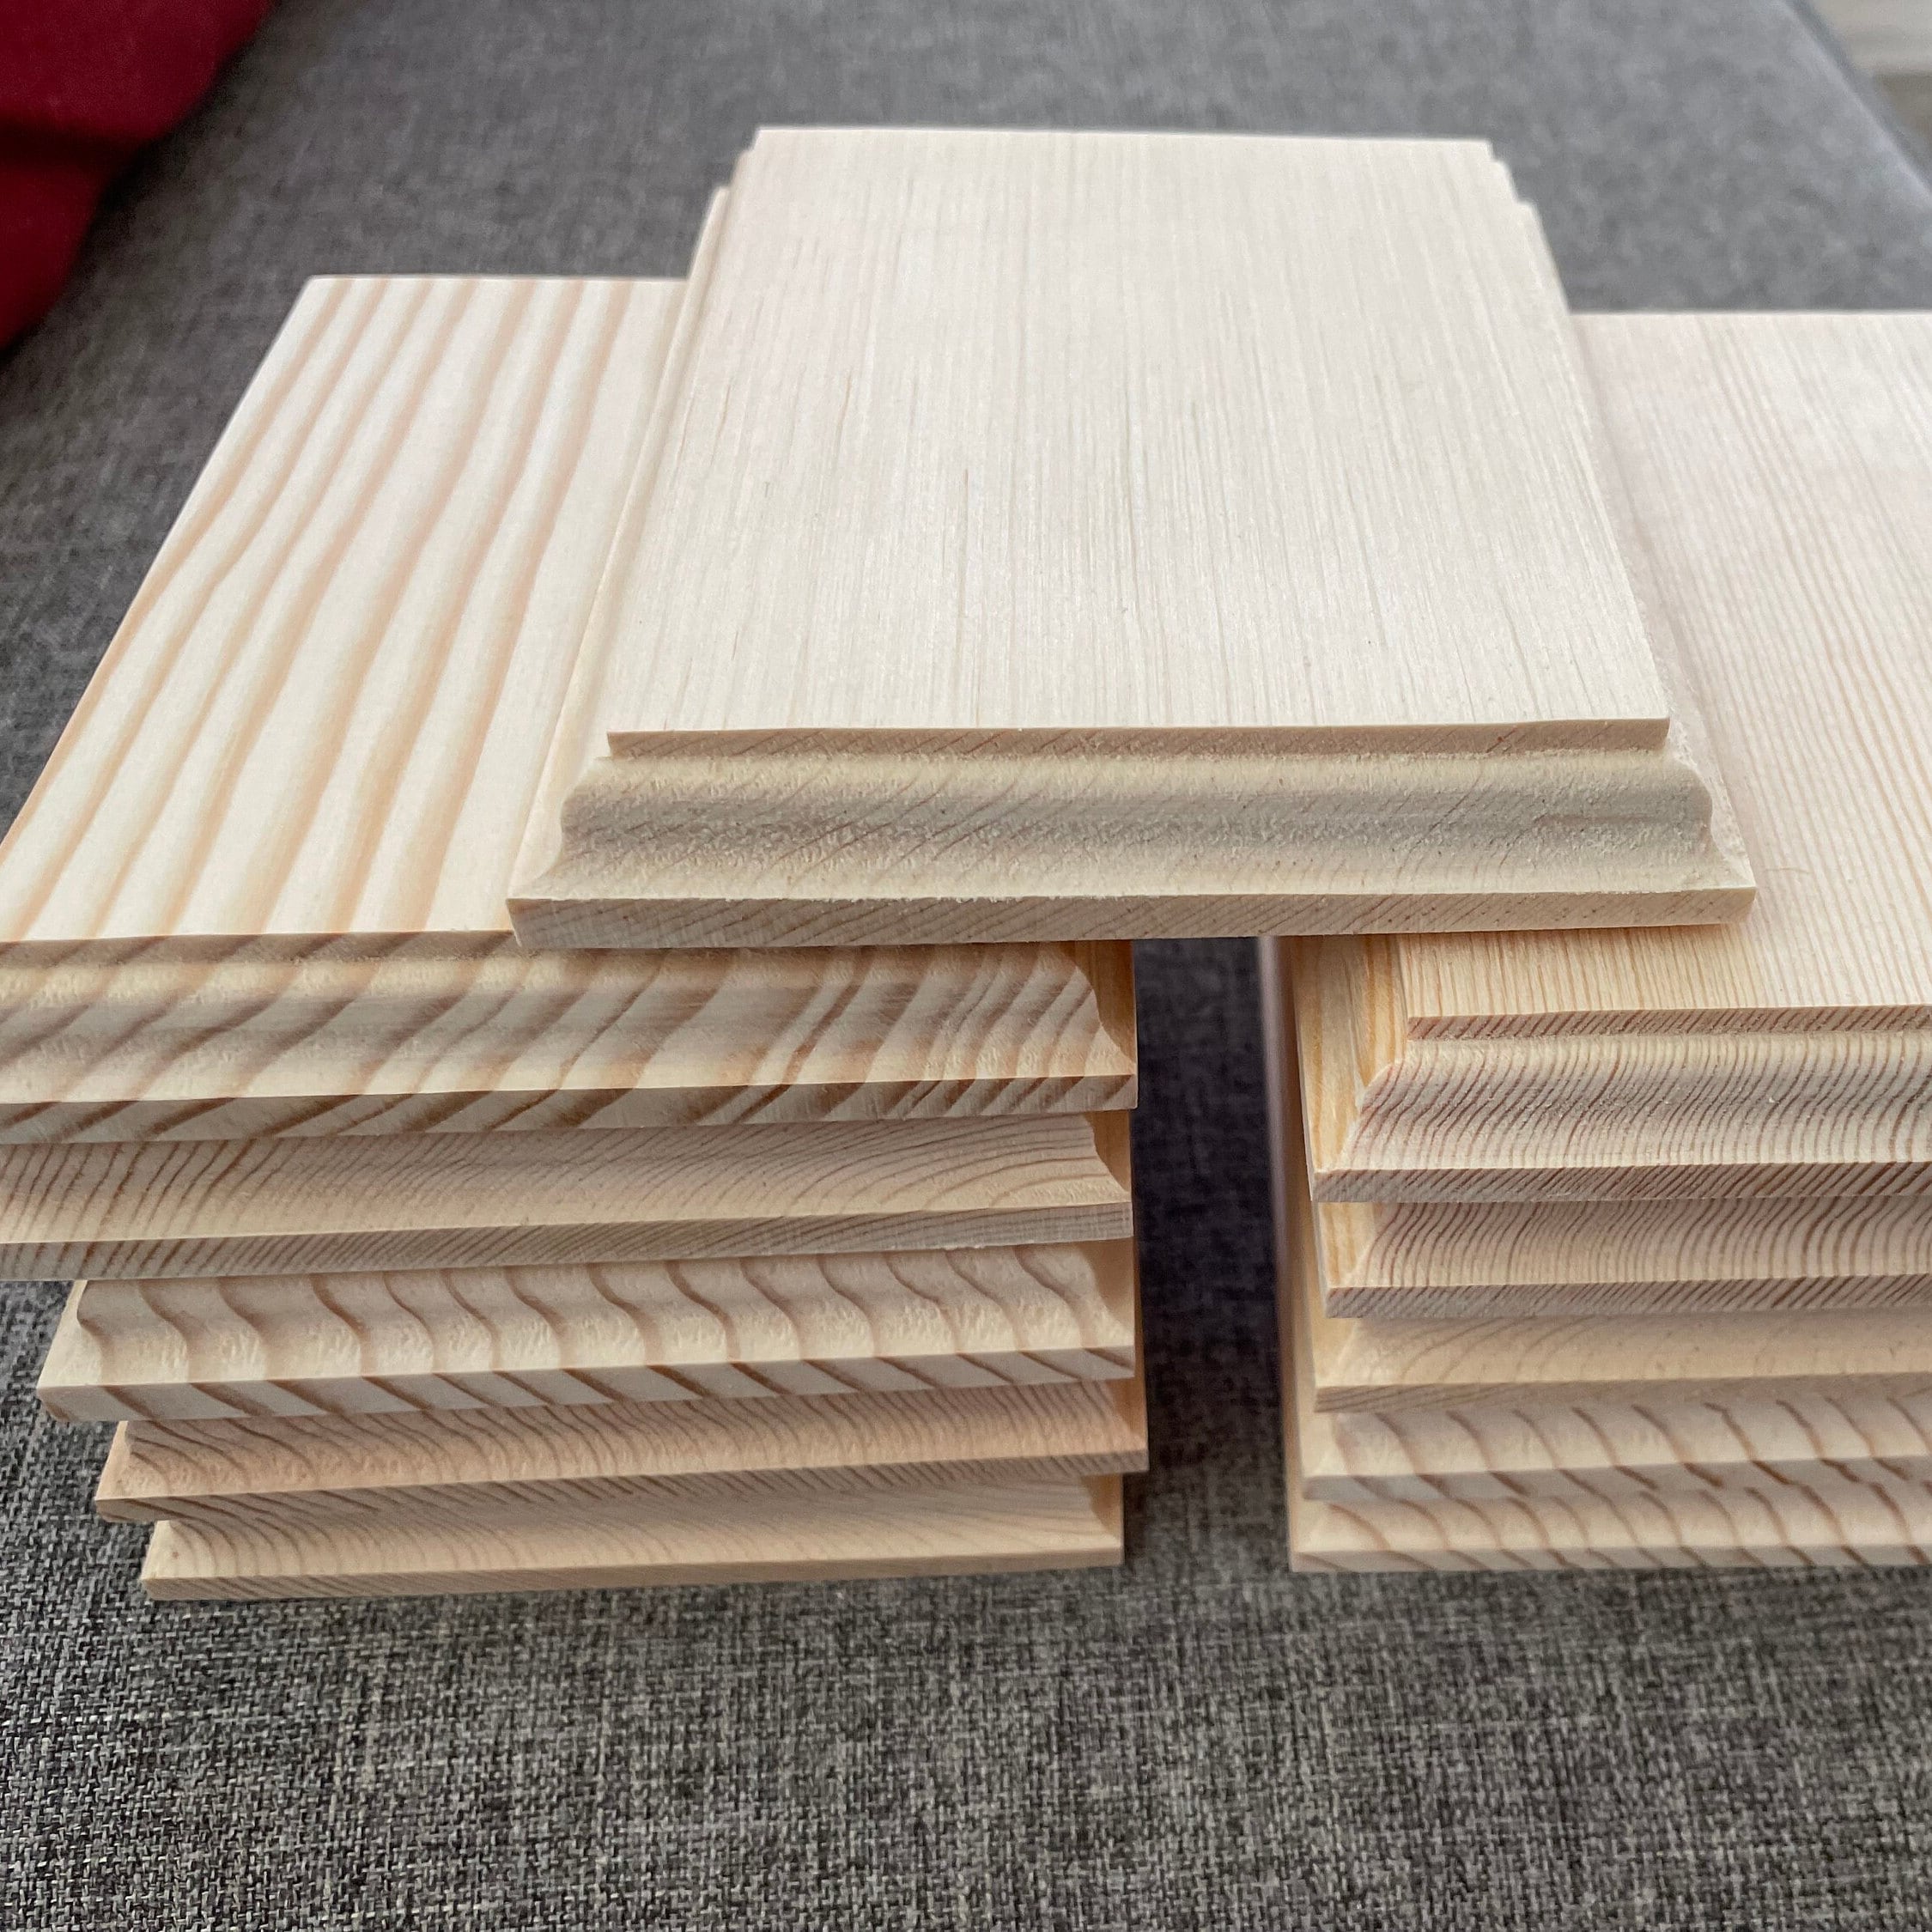 6 x 8 Premium Alder Wood Plaque Blank